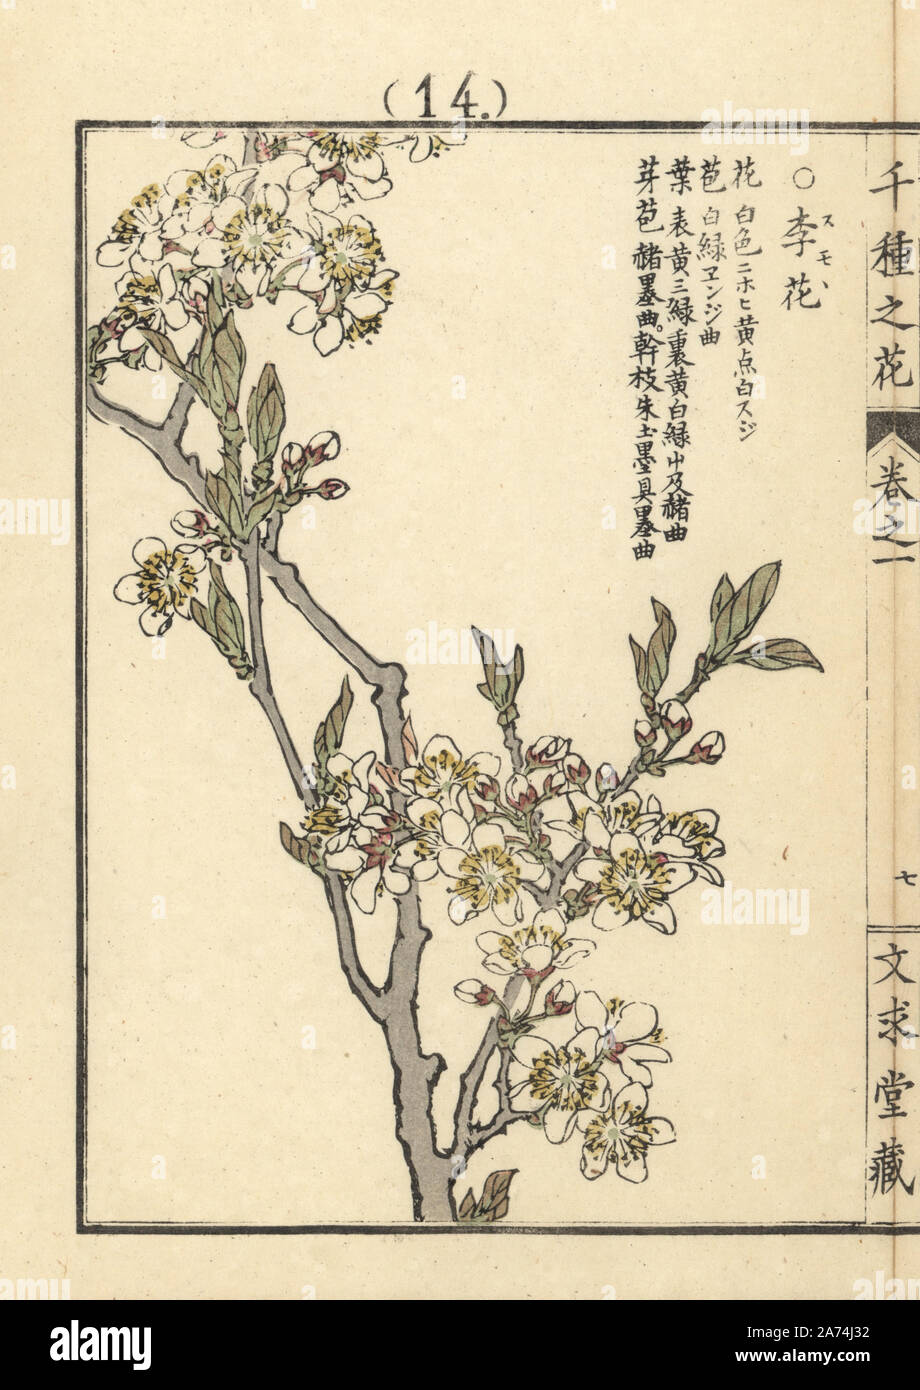 Sumomo or Chinese or Japanese plum, Prunus salicina. Handcoloured woodblock print by Kono Bairei from Senshu no Hana (One Thousand Varieties of Flowers), Bunkyudo, Kyoto, 1900. Stock Photo